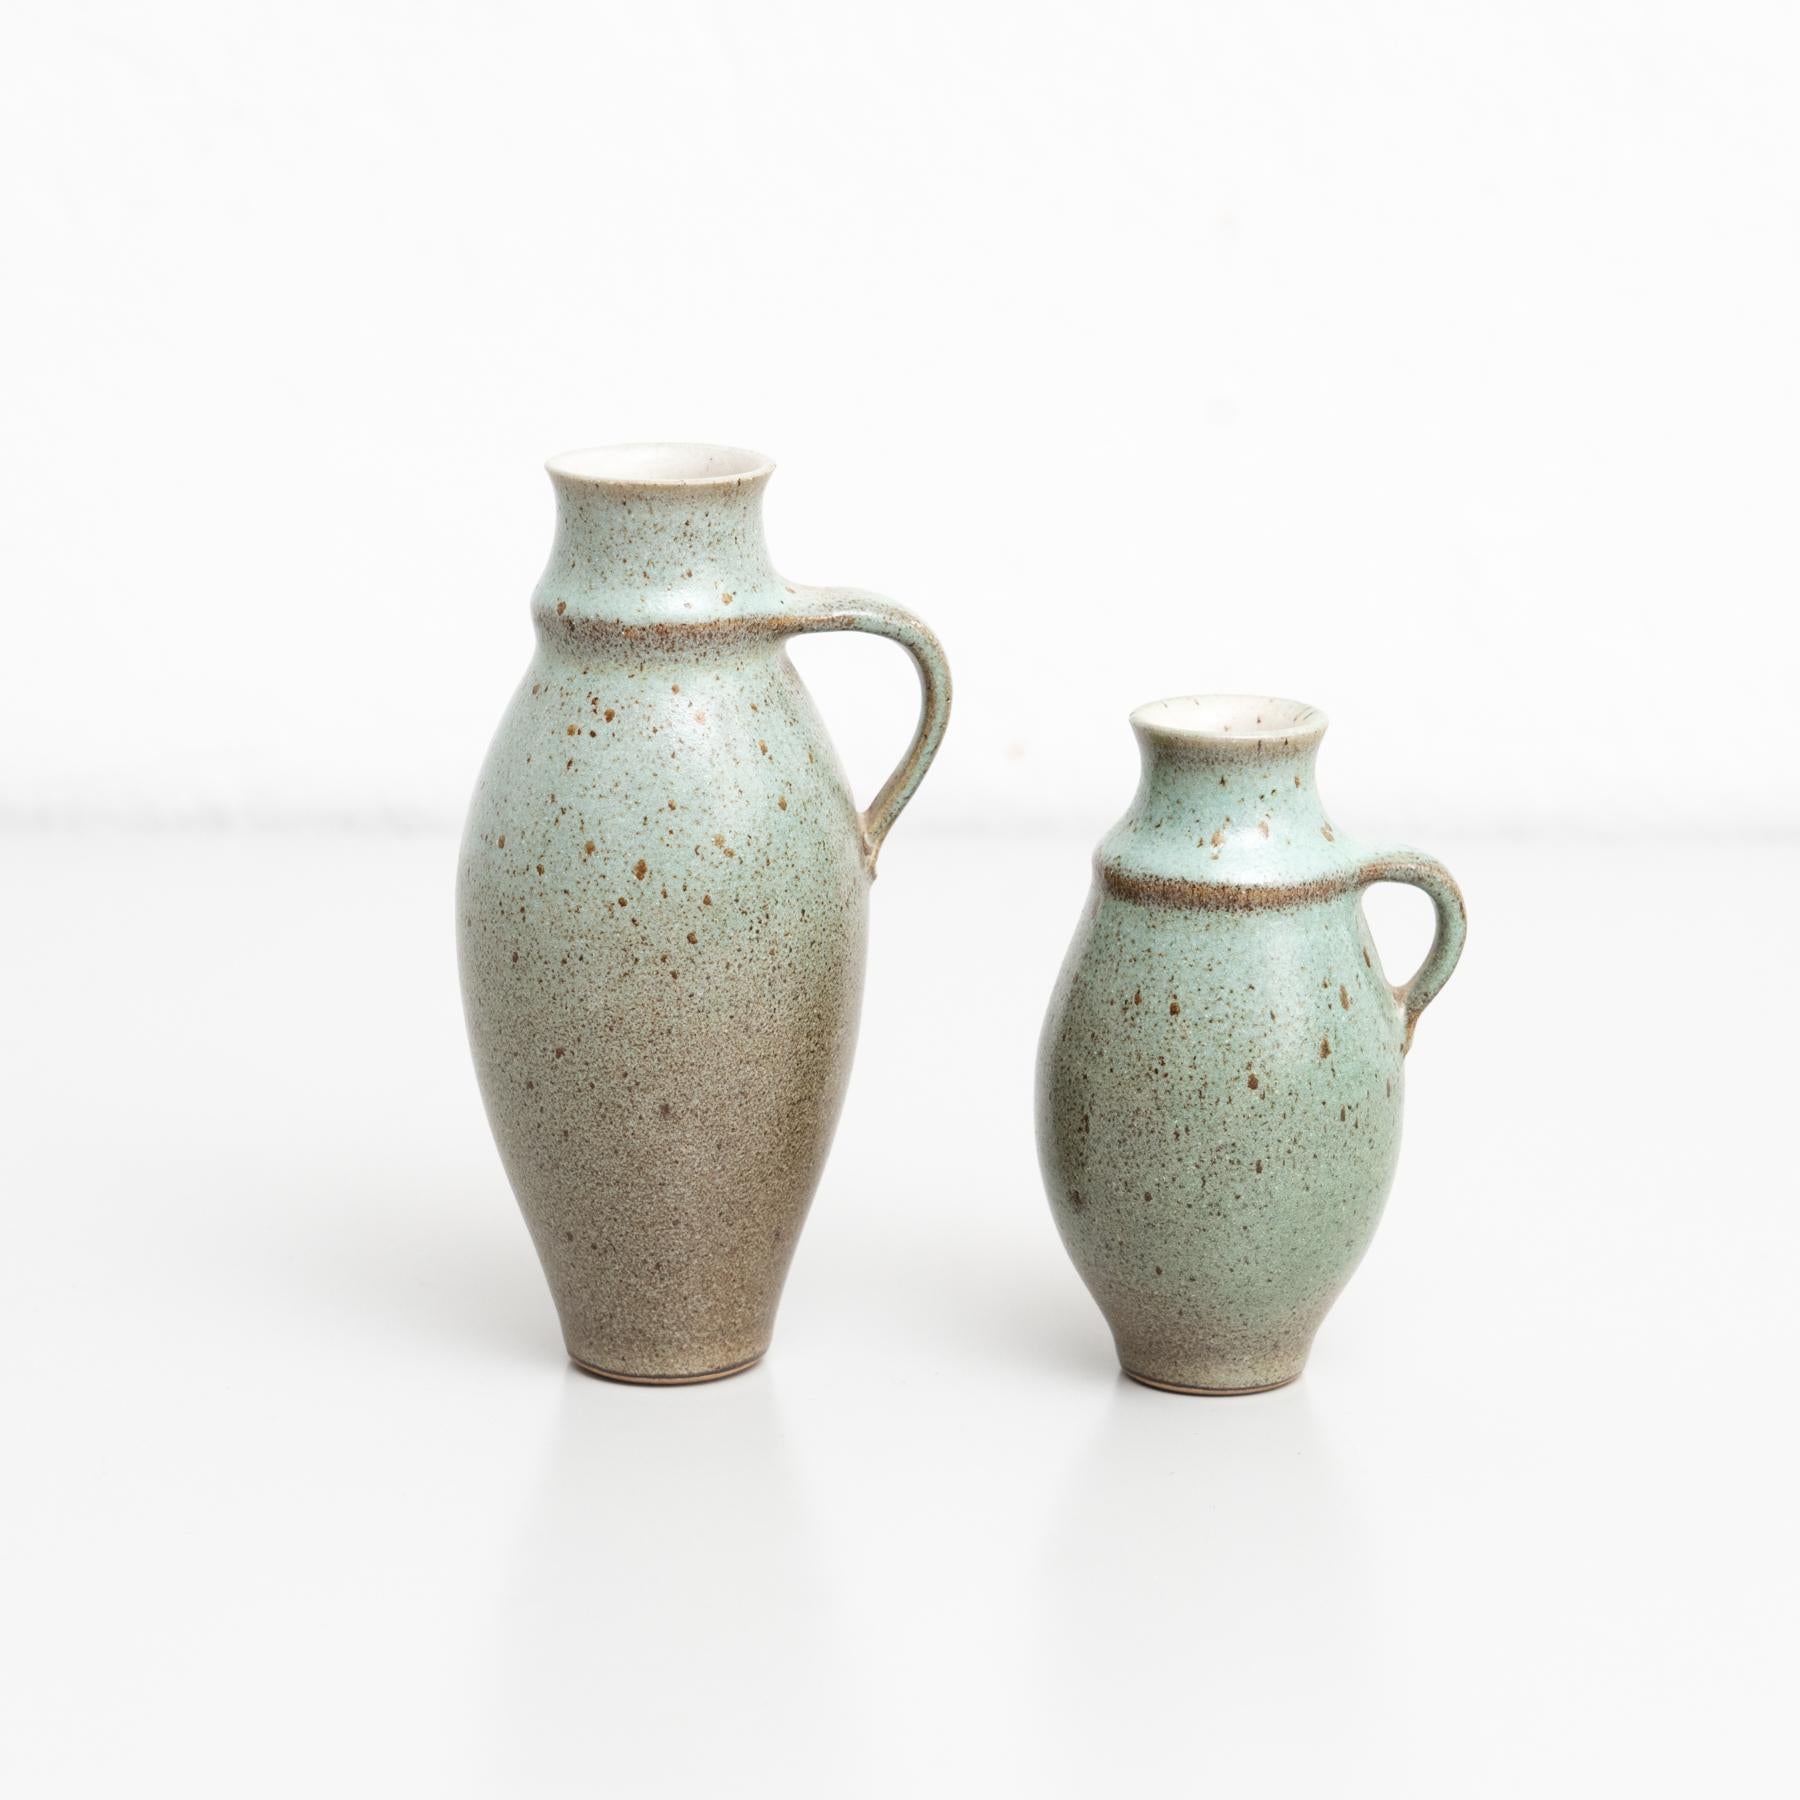 Rustic Set of Two Traditional Spanish Vintage Ceramic Vases, circa 1950